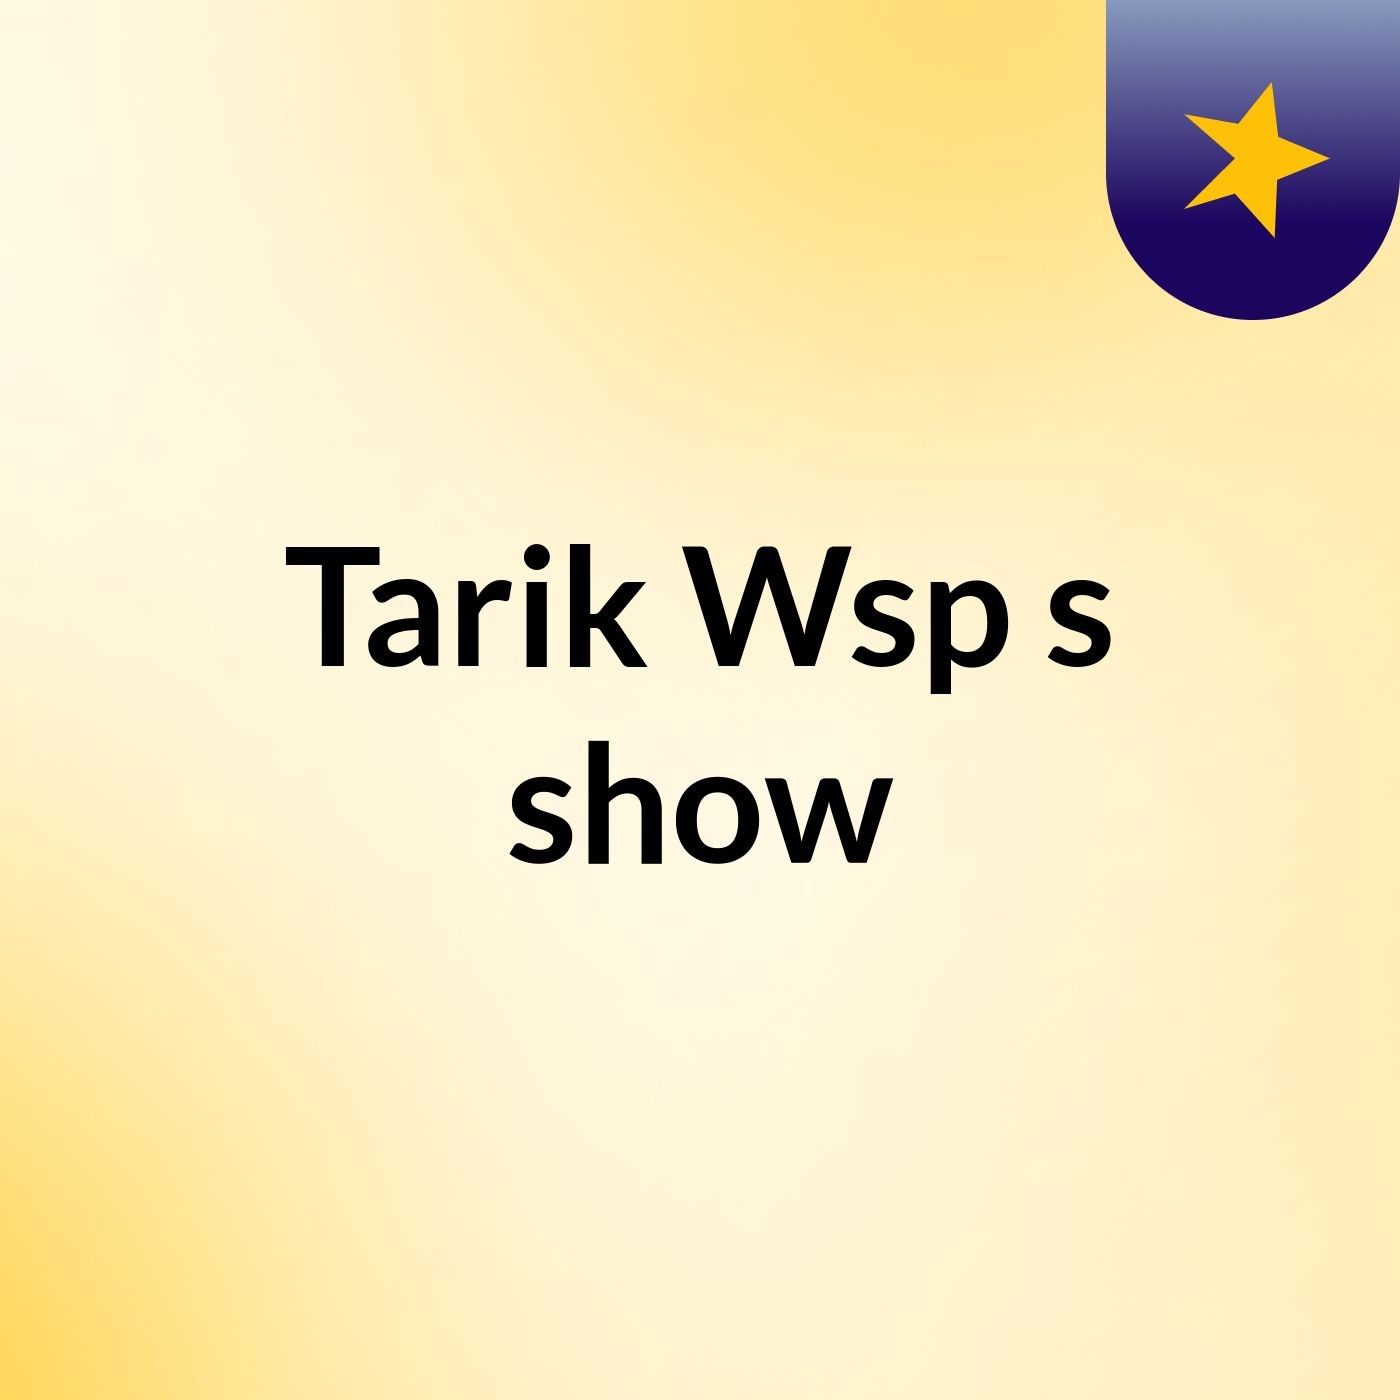 Tarik Wsp's show